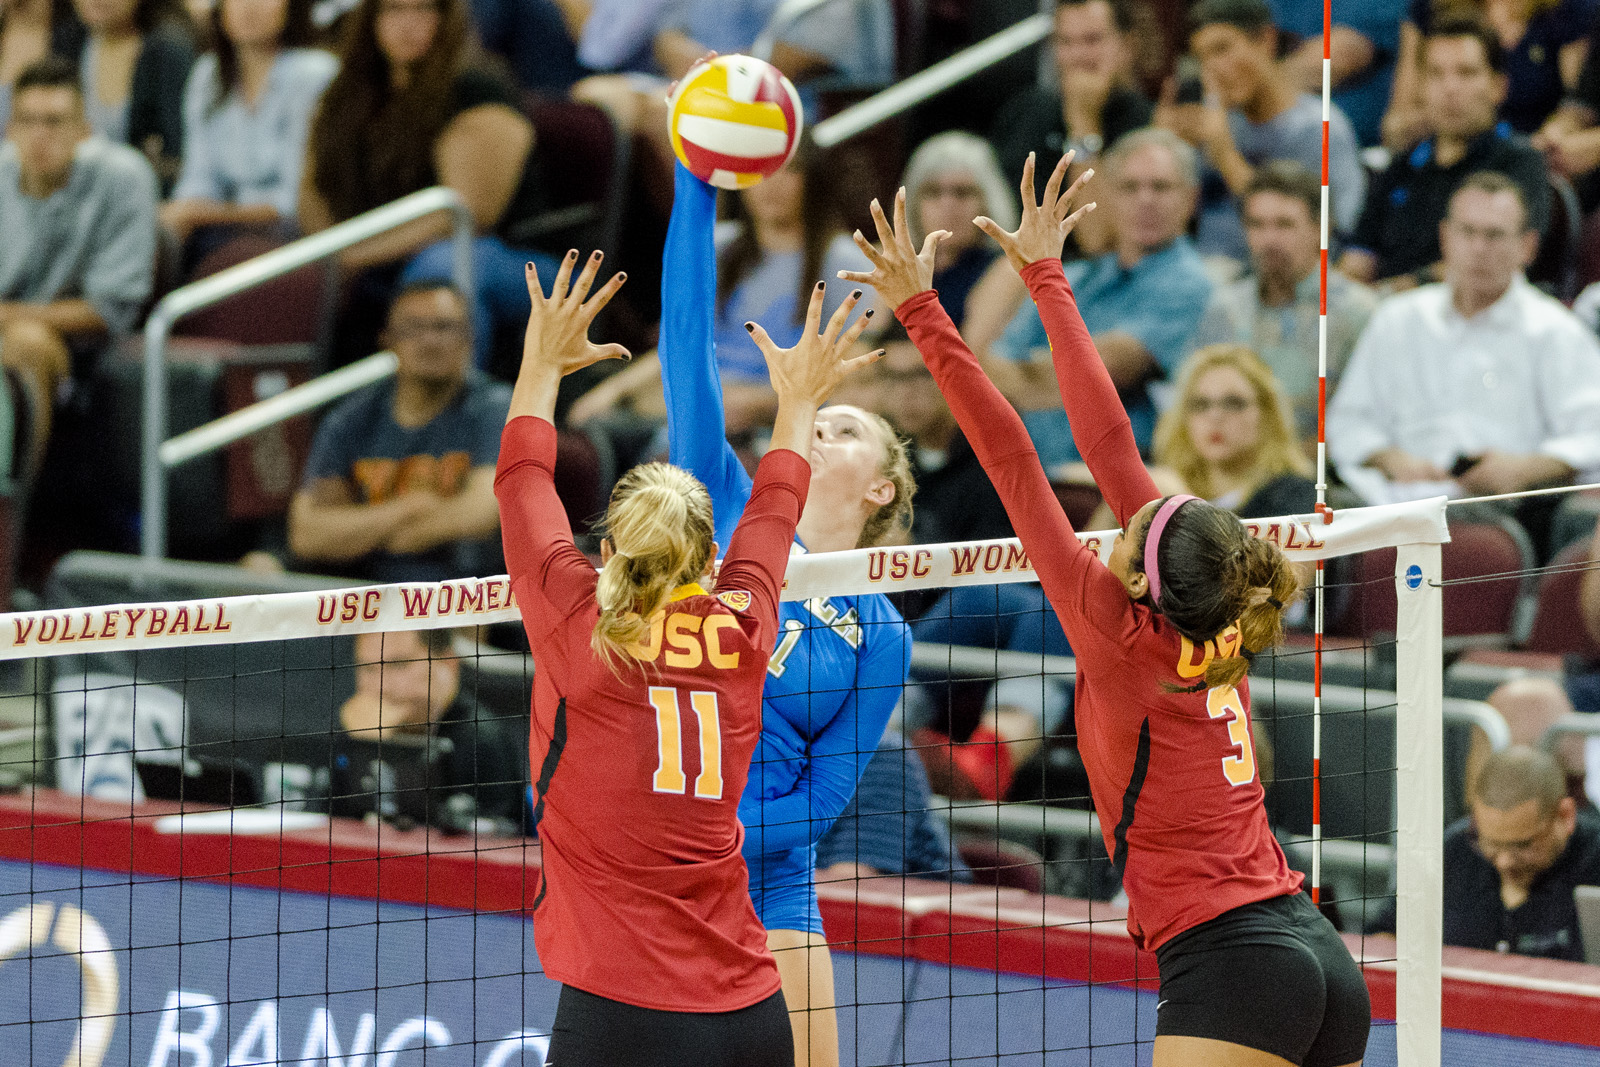 Women’s volleyball looks to topple USC in last regular season game ...